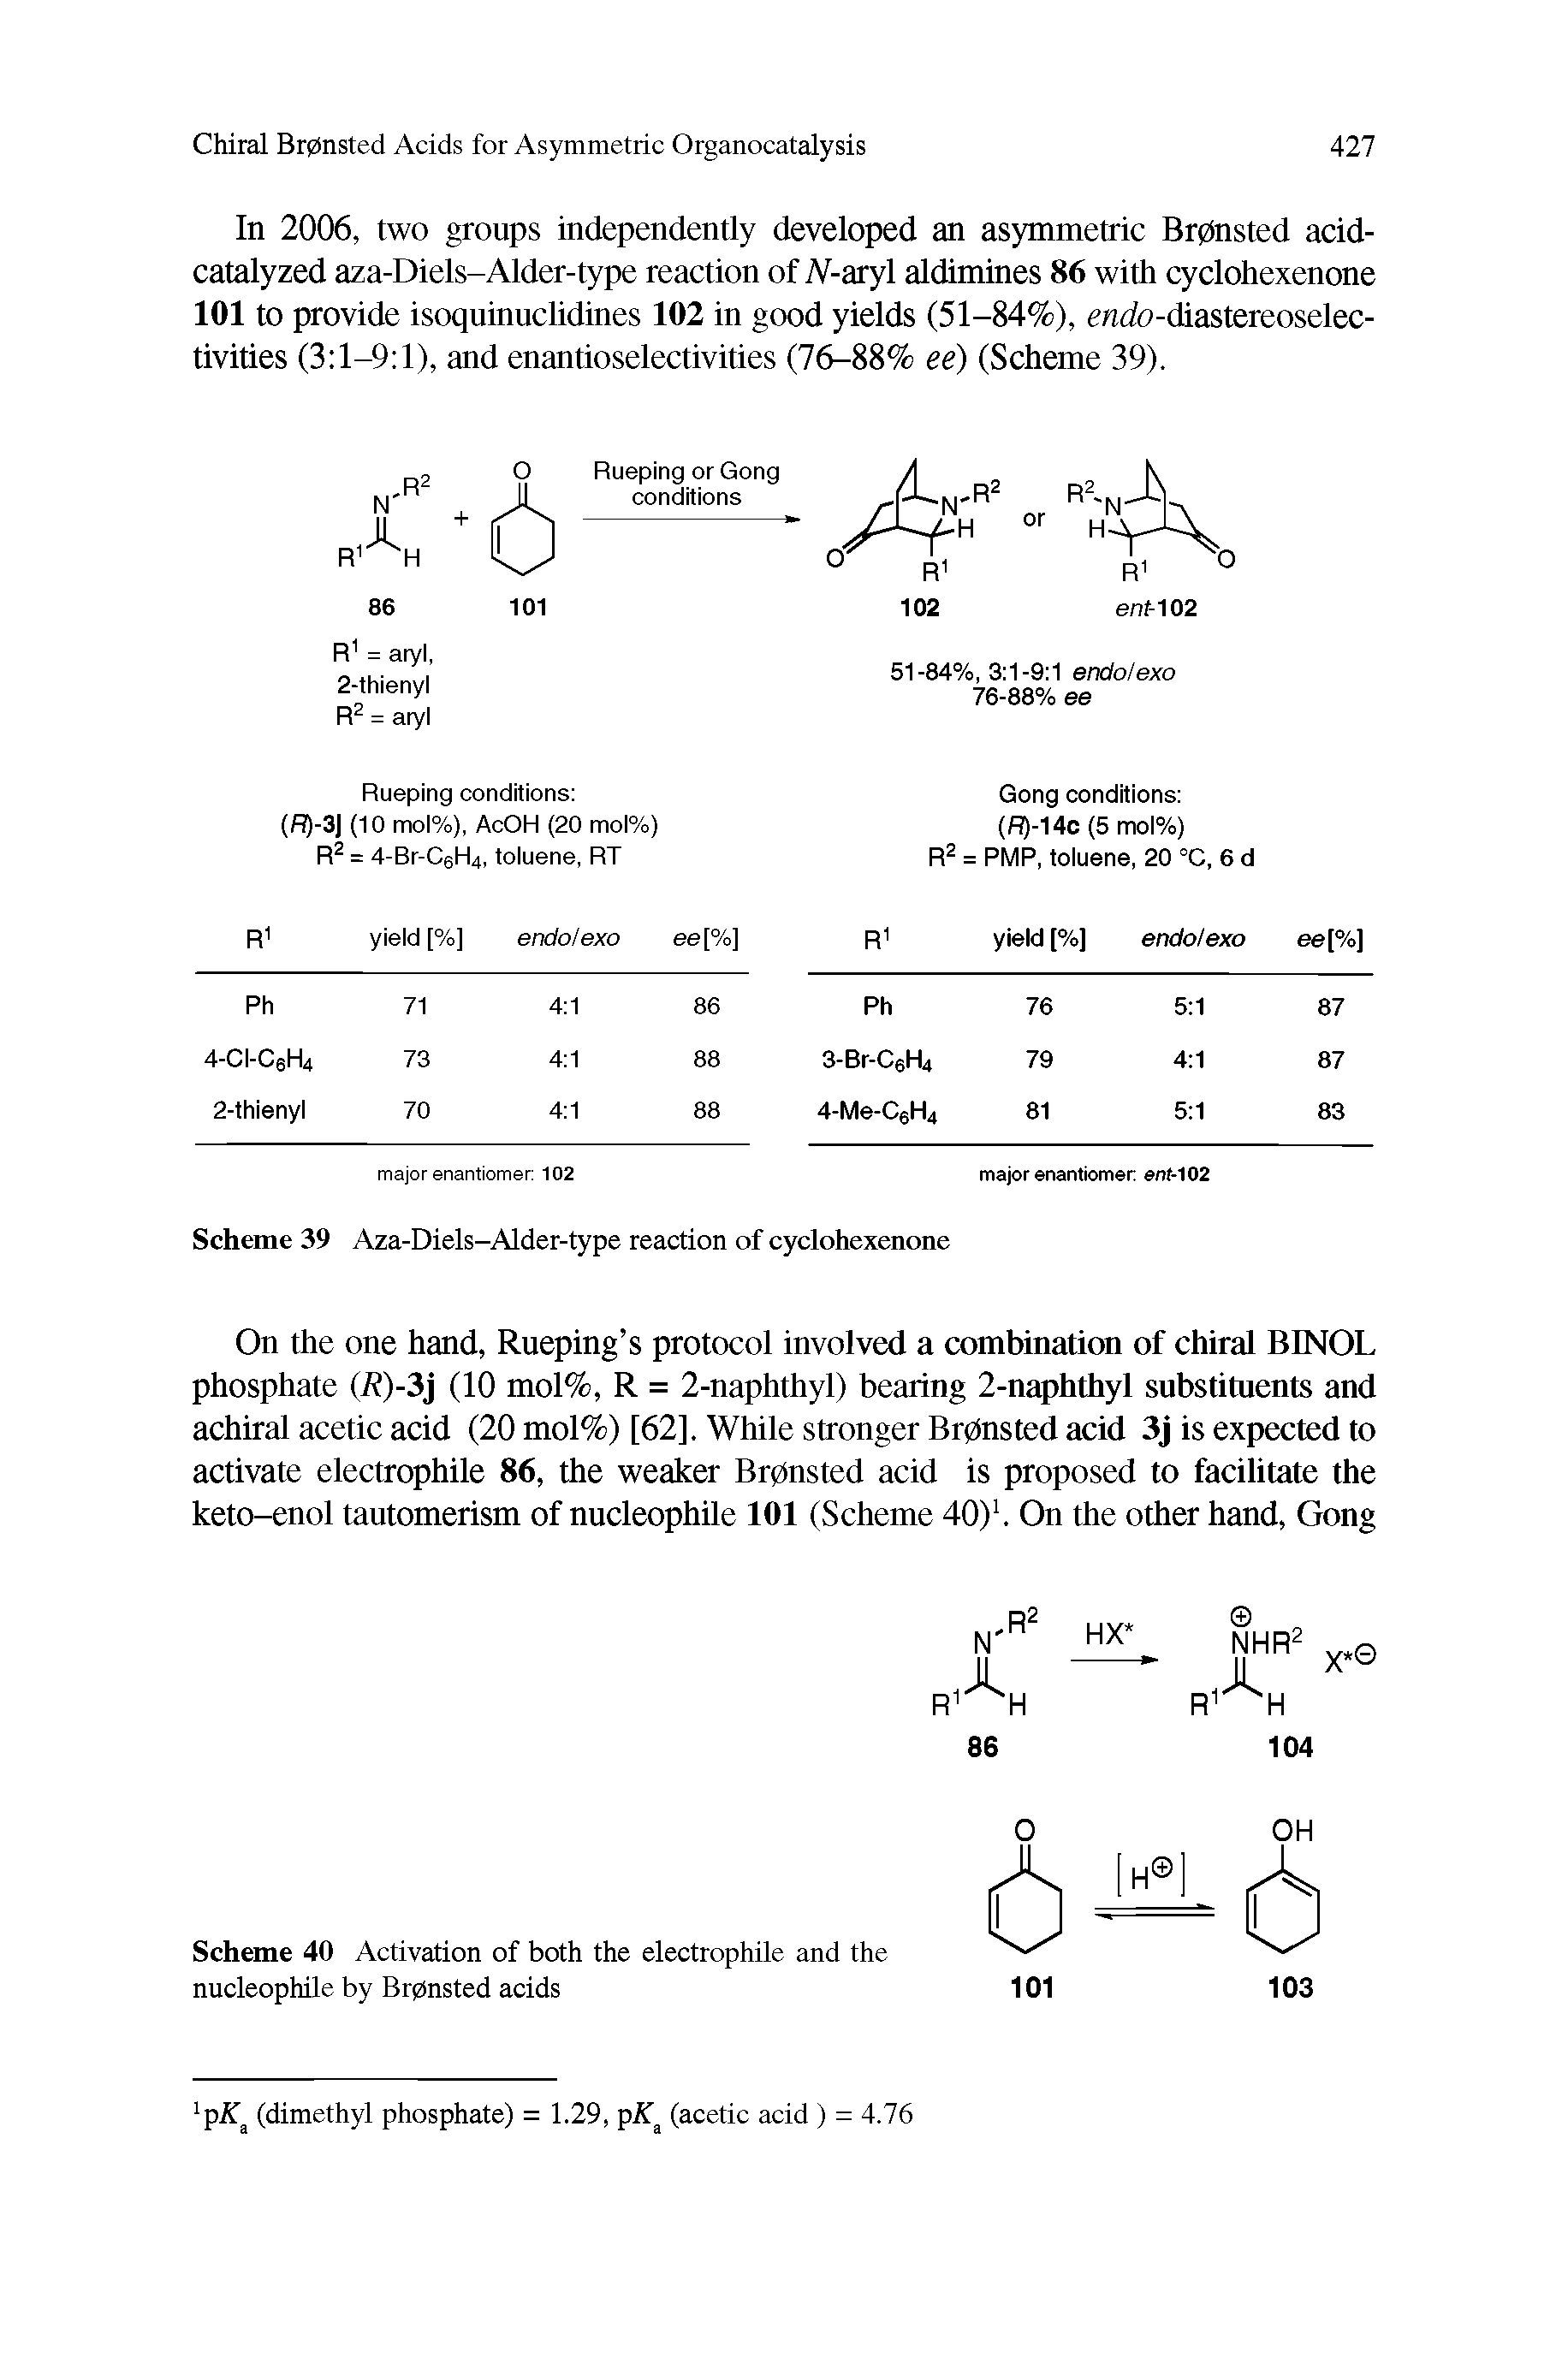 Scheme 39 Aza-Diels-Alder-type reaction of cyclohexenone...